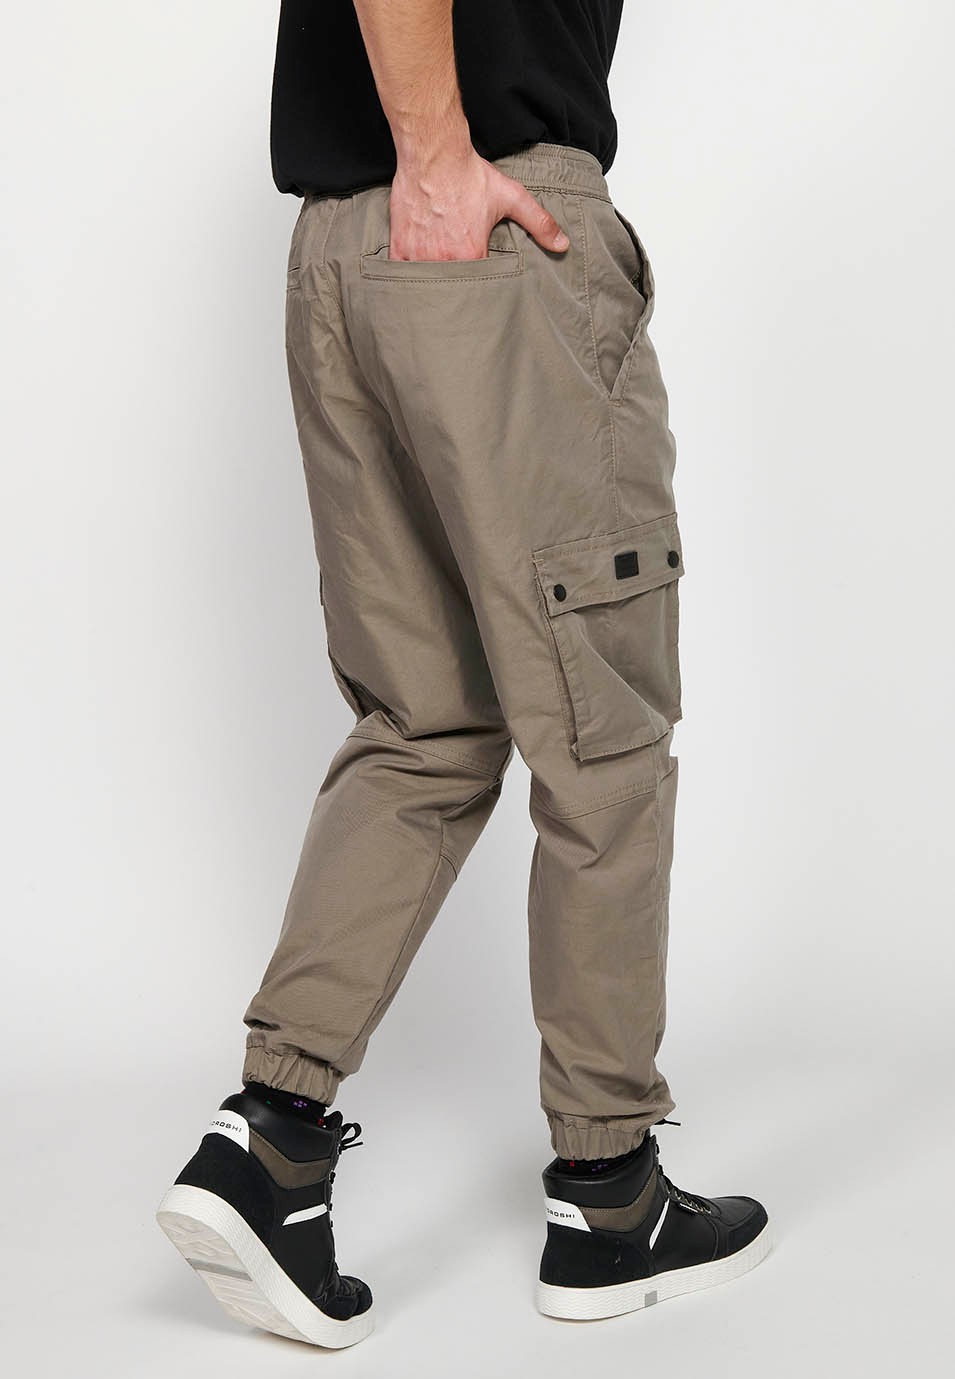 Pantalón jogger cargo con Cintura engomada con cordón y Bolsillos, dos laterales con solapa de Color Beige para Hombre